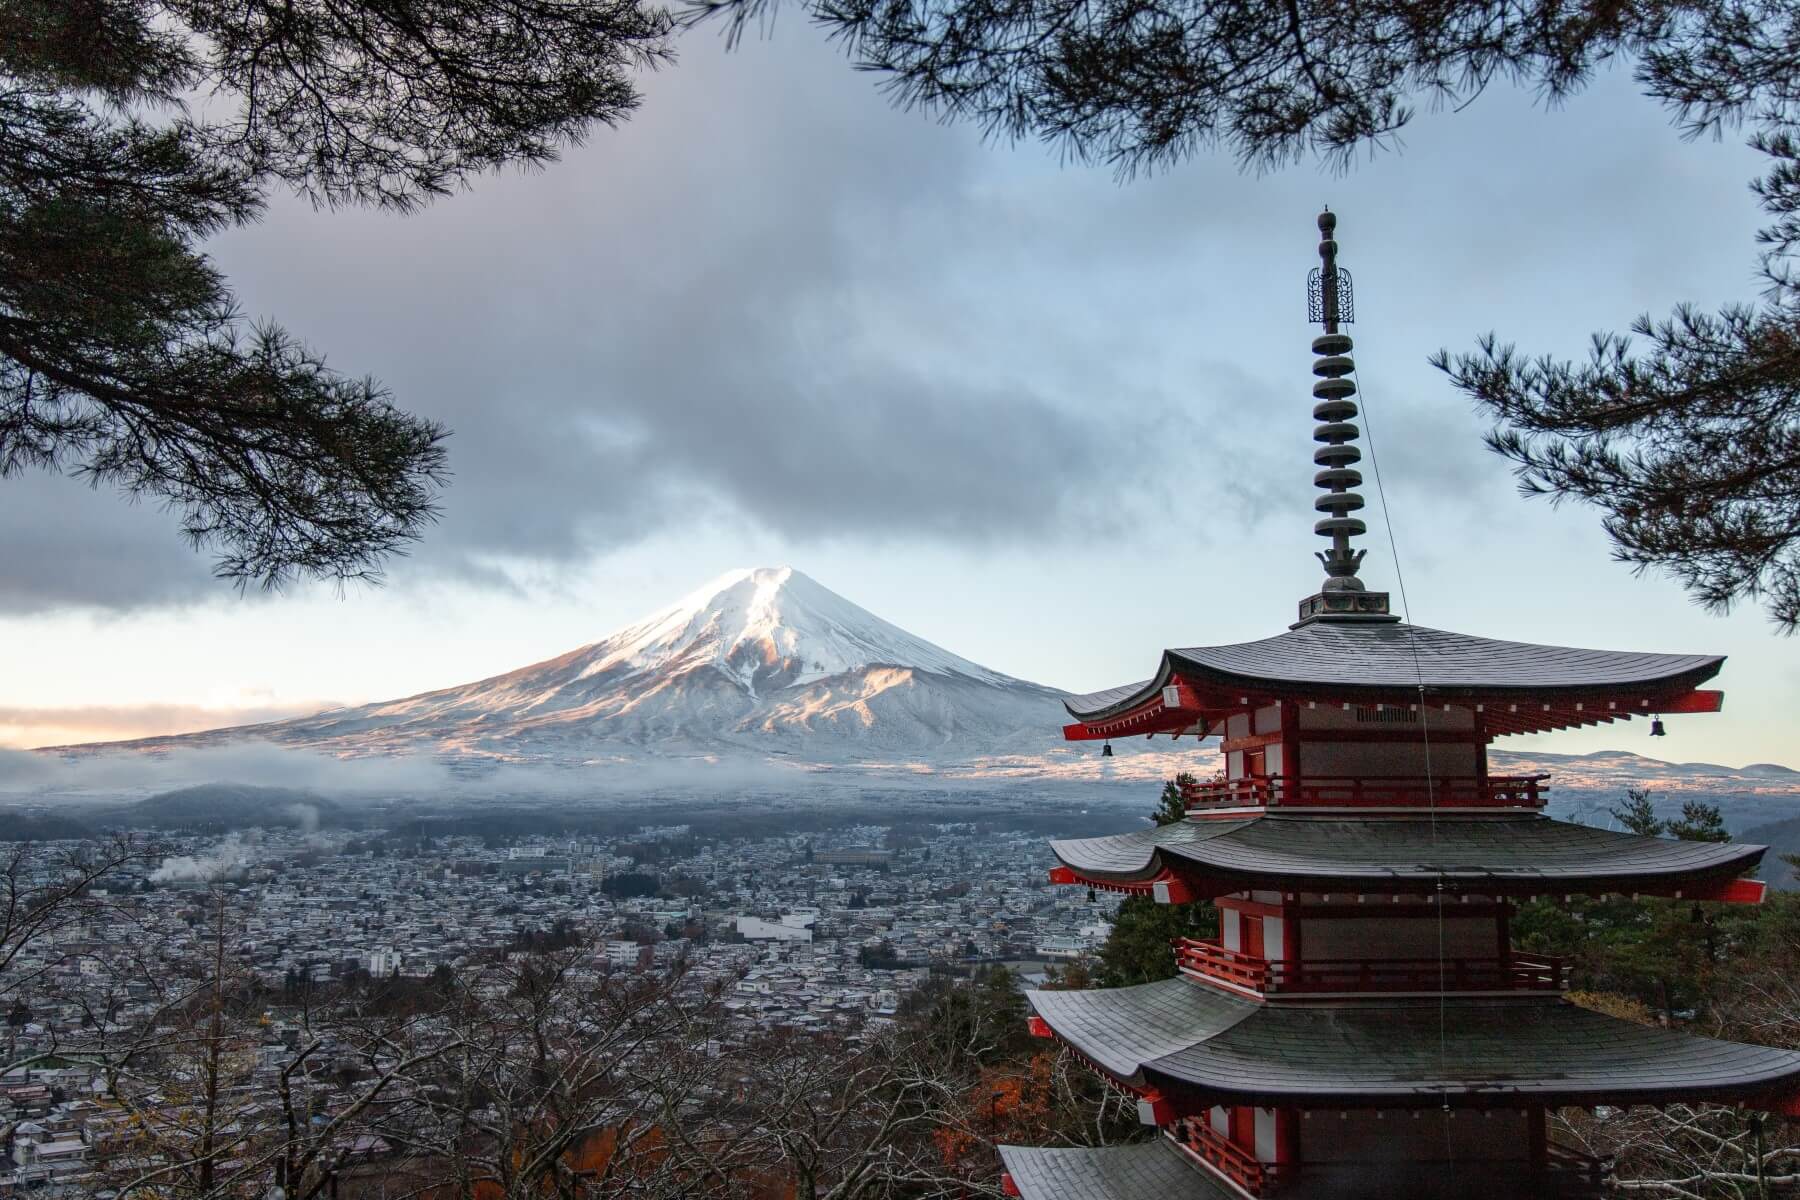 Views of Mount Fuji in Japan